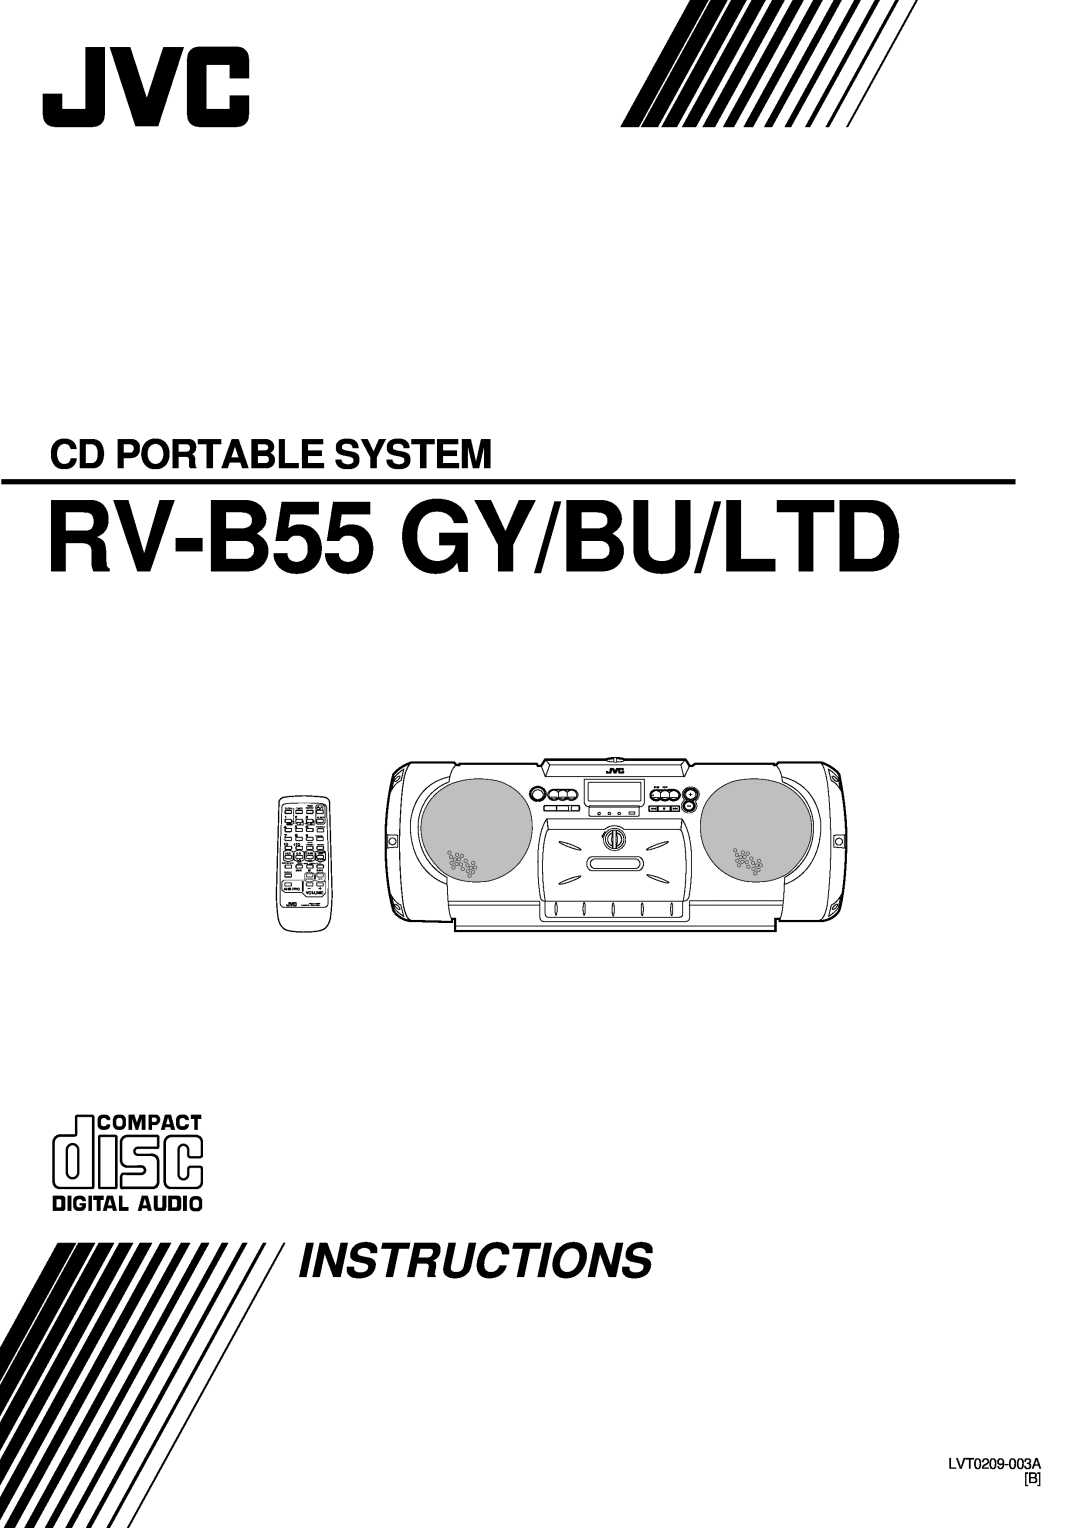 JVC RV-B55 LTD manual Instructions, Cd Portable System, LVT0209-003AB, Ahb Pro Volume, Sleep, Aux C D Tape, Tuner, Sound 